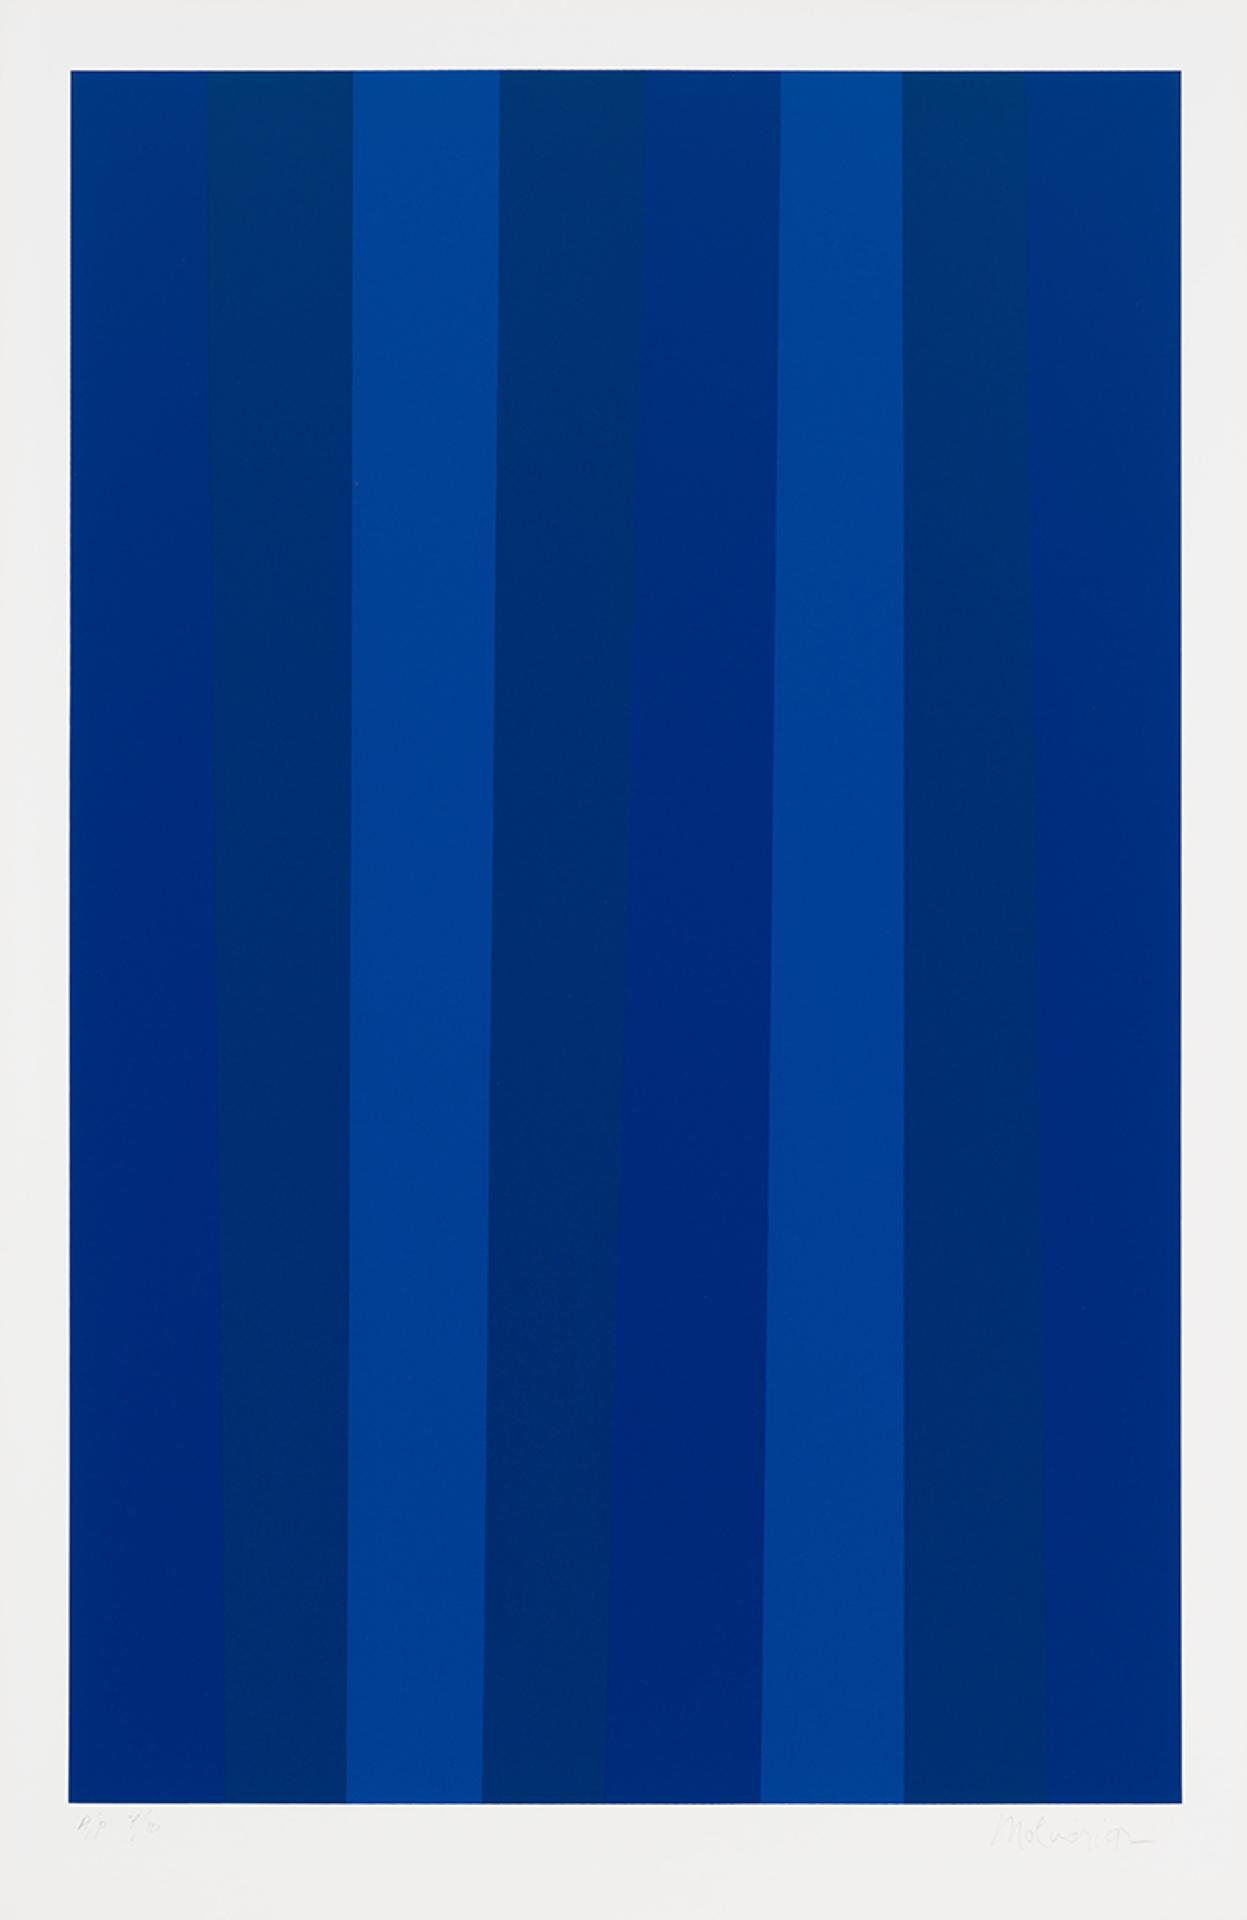 Guido Molinari (1933-2004) - Blue Quantifier #25